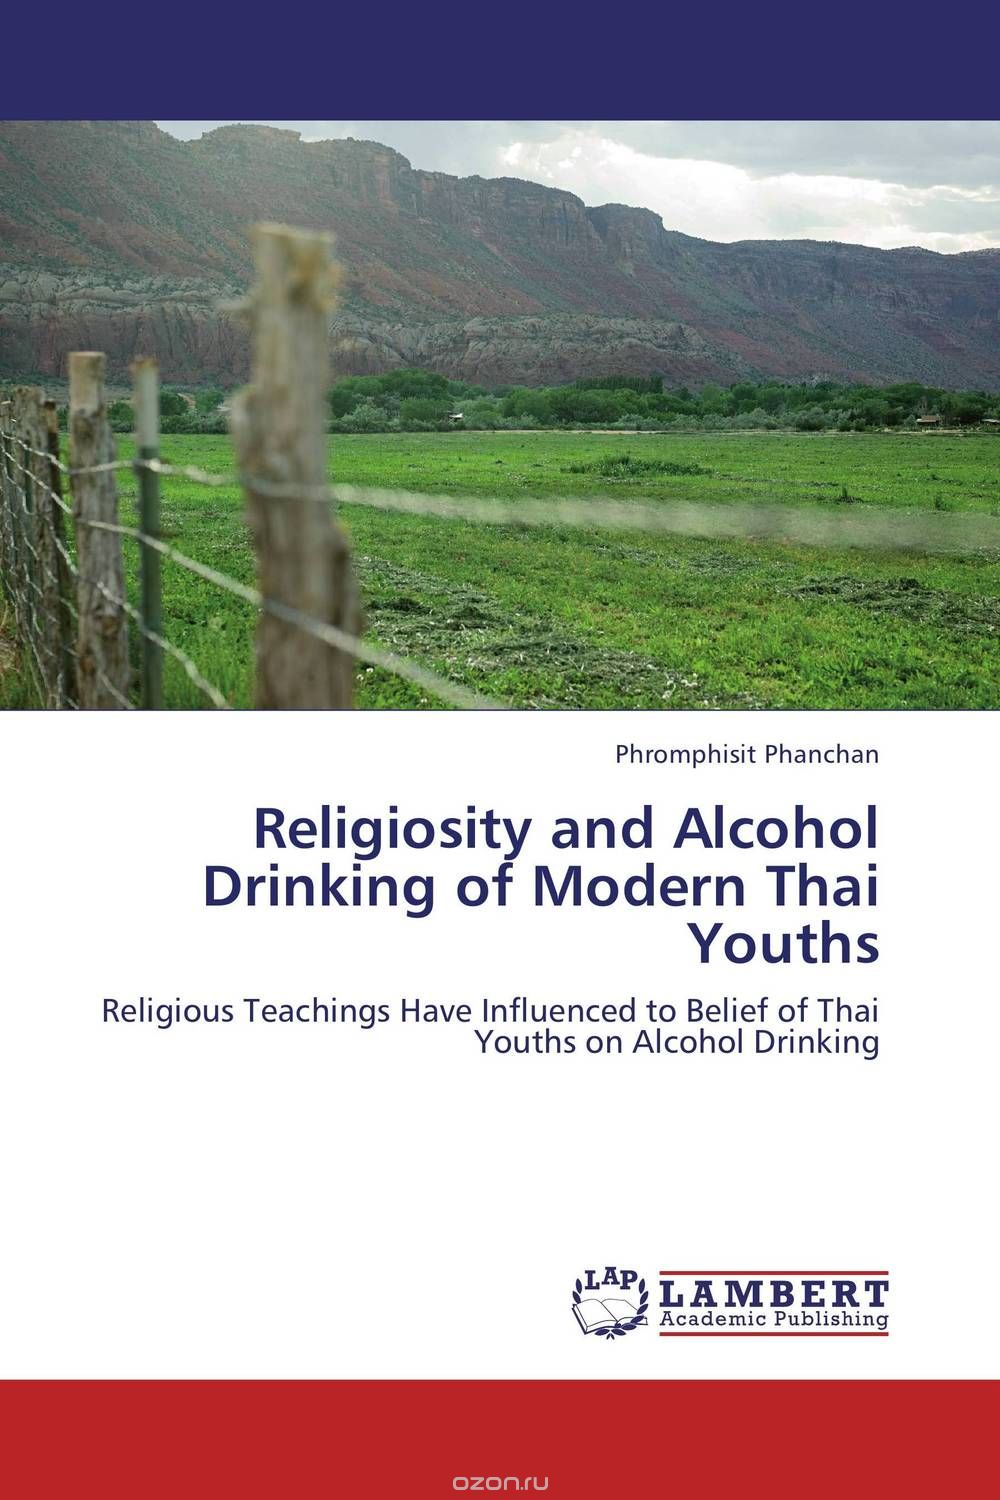 Скачать книгу "Religiosity and Alcohol Drinking of Modern Thai Youths"